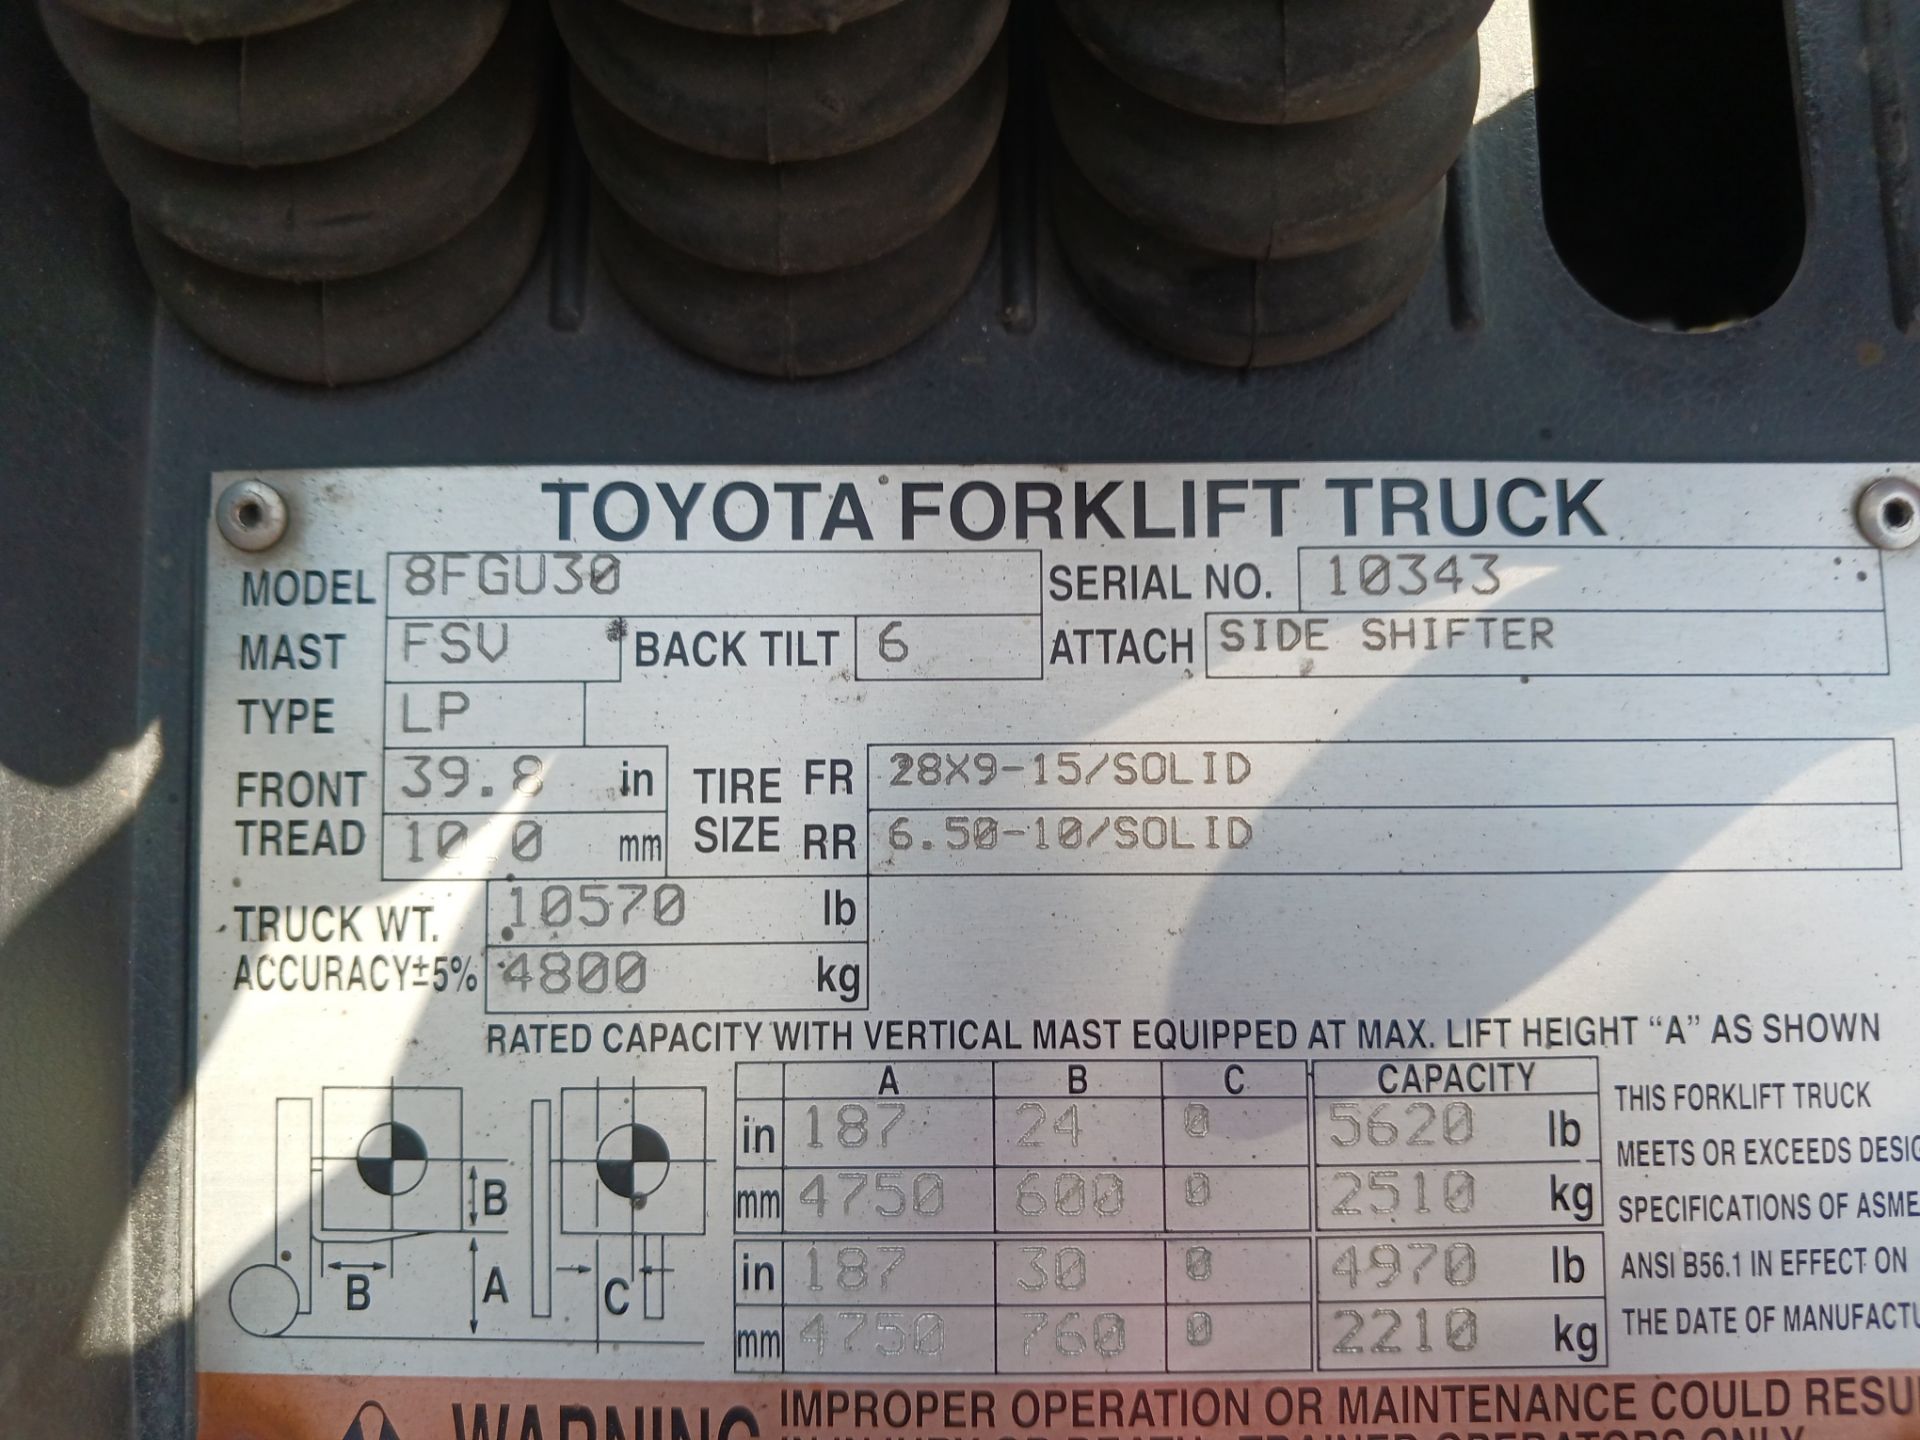 Toyota 8FGU30 6,000 lb Forklift - Lester, PA - Image 13 of 13